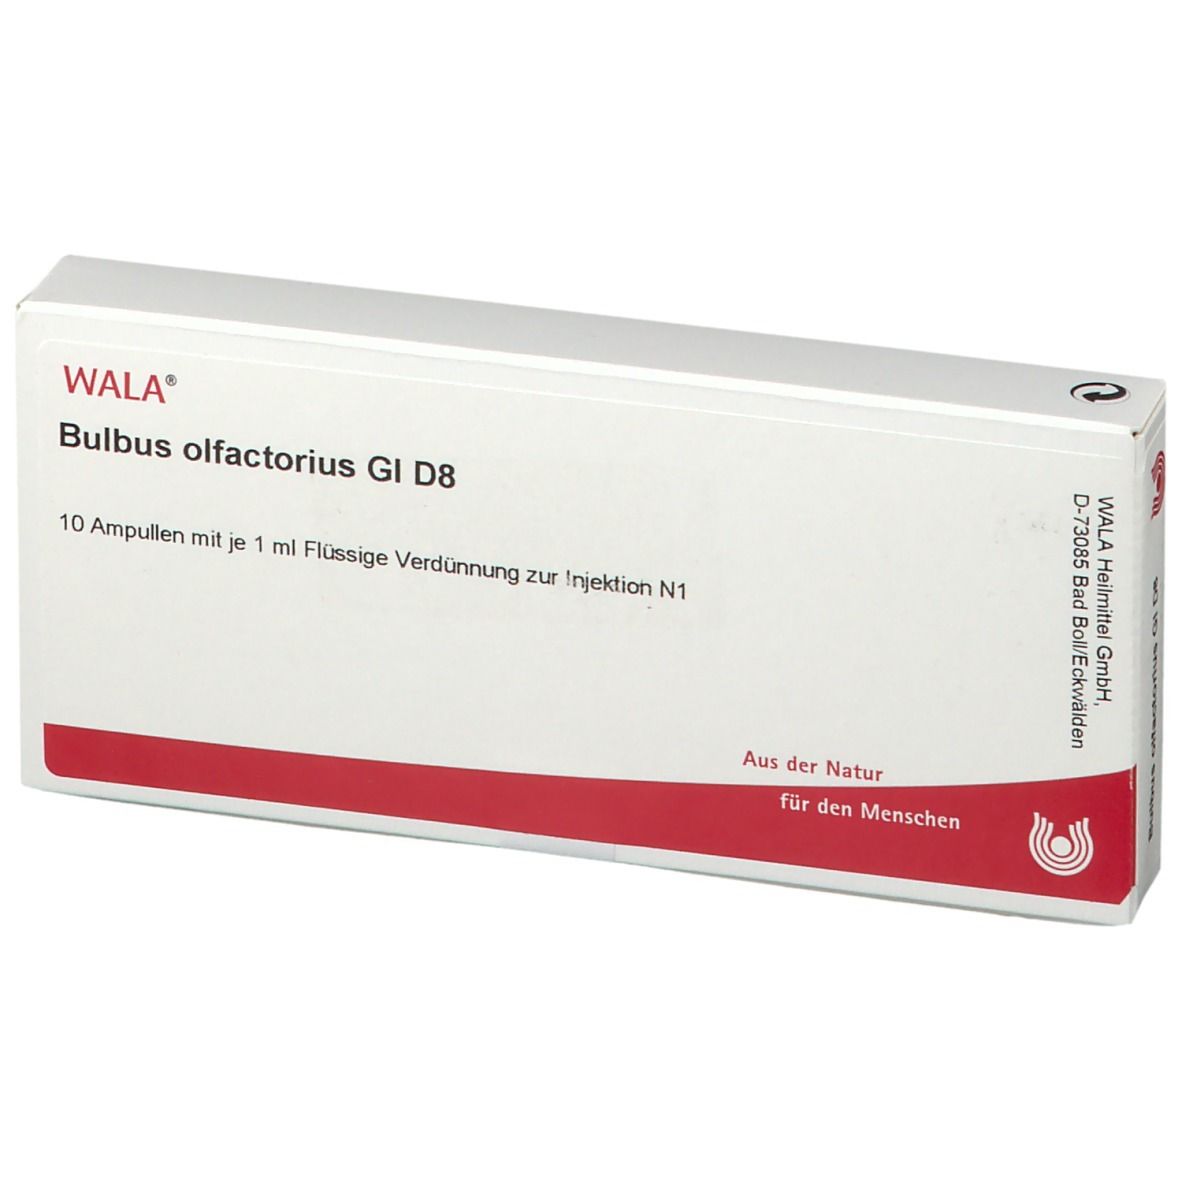 WALA® Bulbus olfactorius Gl D 8